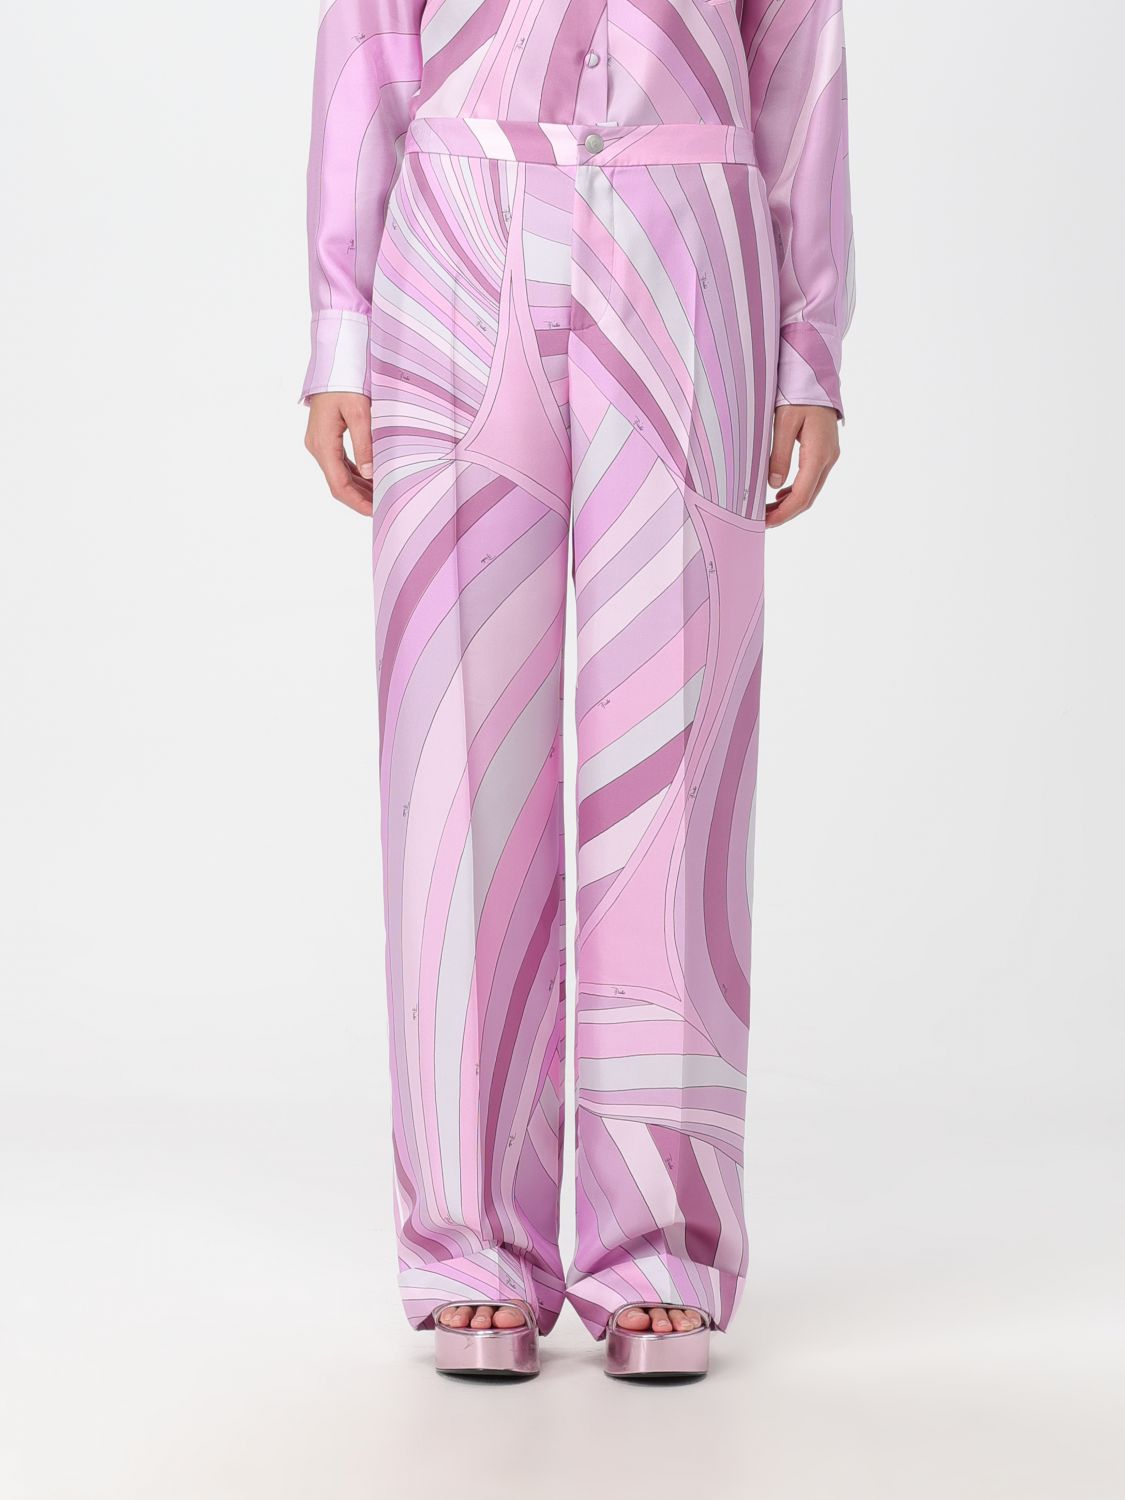 Emilio Pucci Pale Pink Battistero Print Silk Palazzo Trousers & Shirt Set M  Emilio Pucci